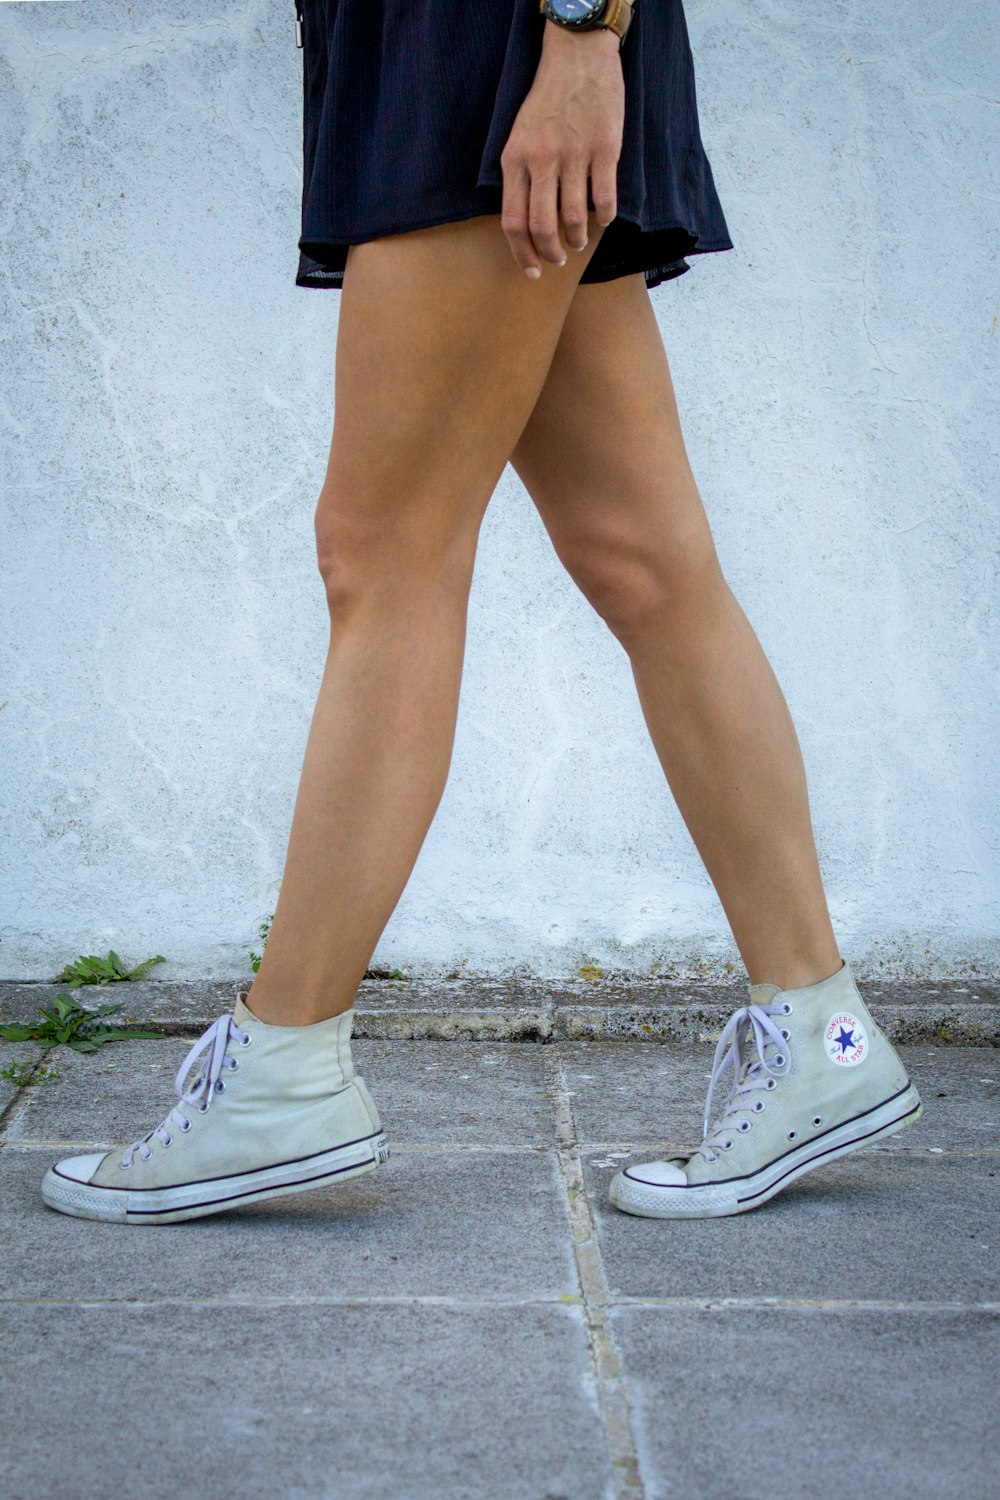 a woman walking down a sidewalk wearing tennis shoes